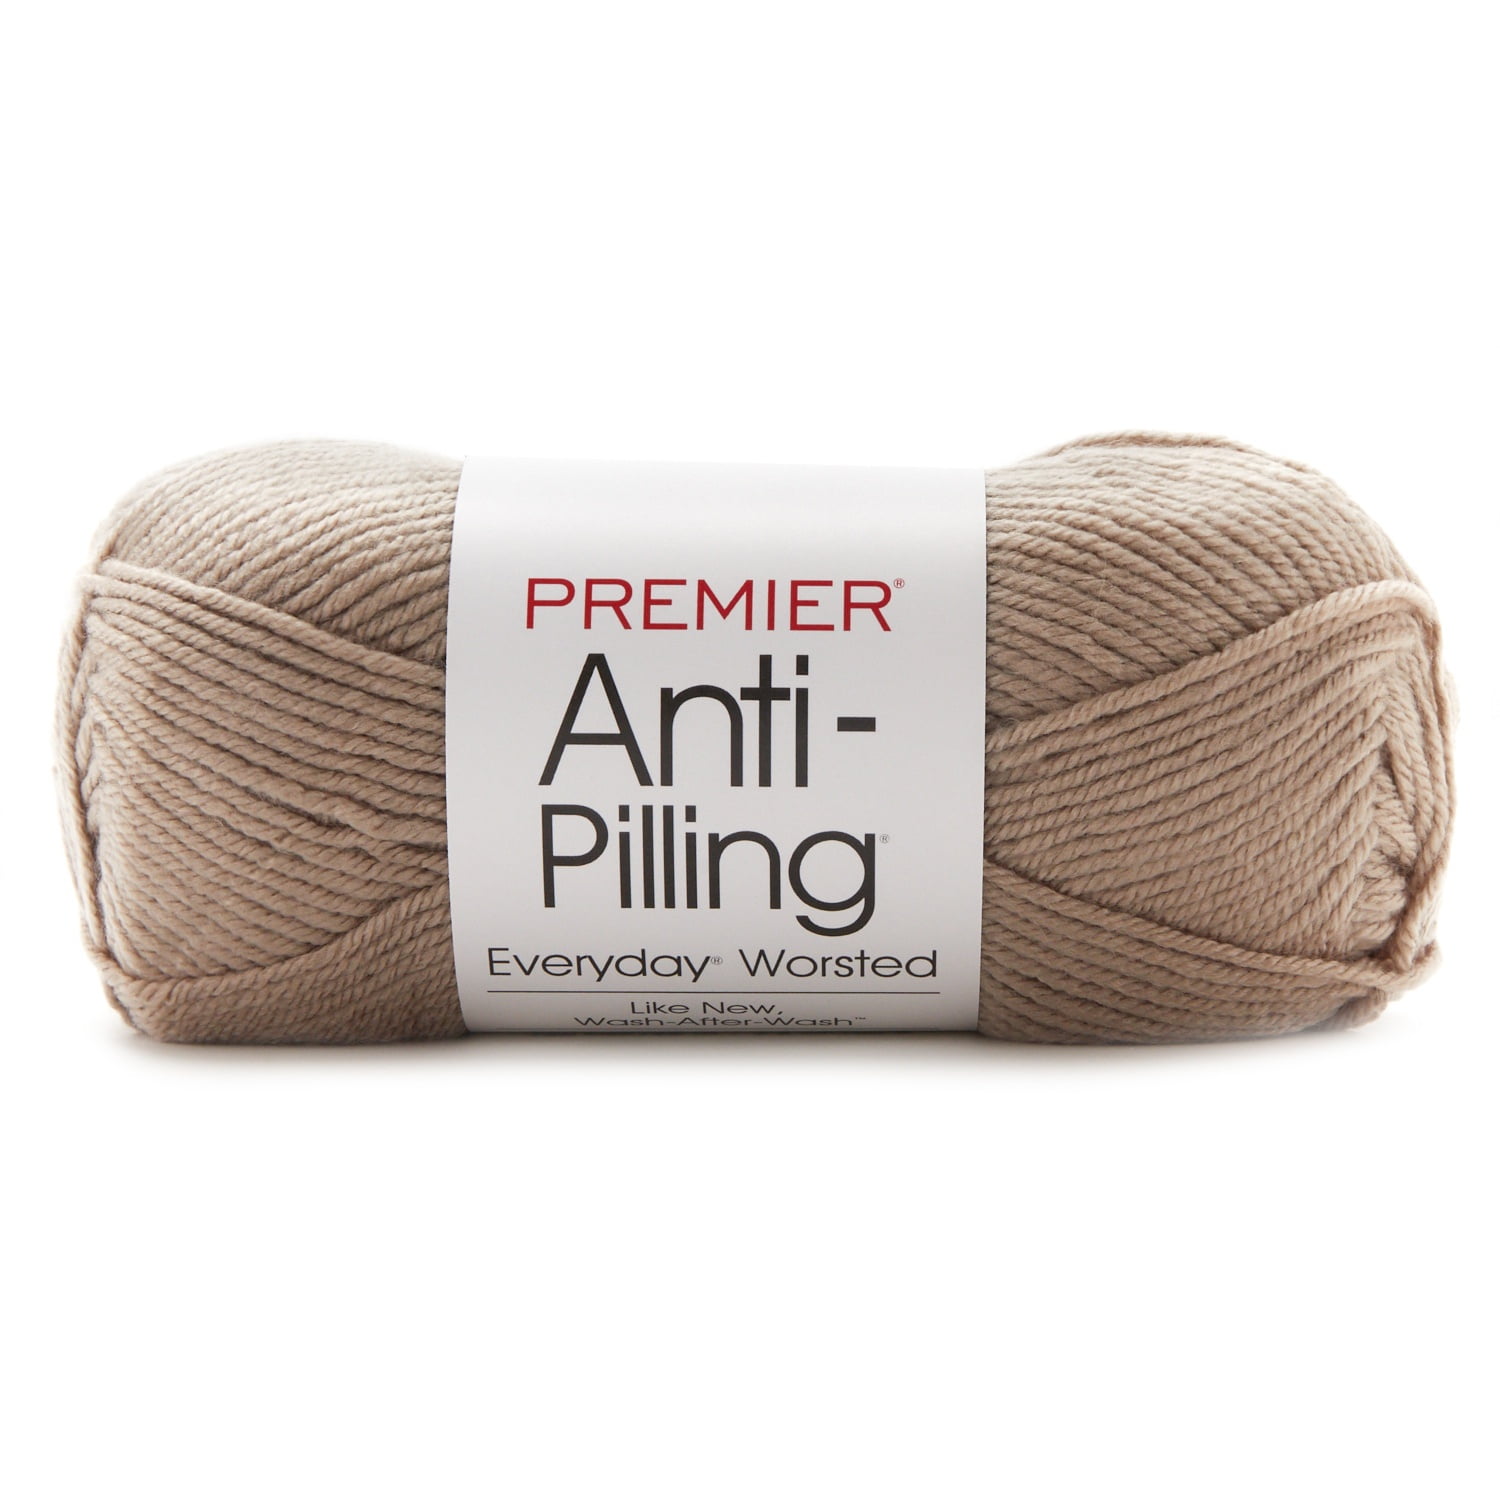 Why I Love Premier Yarns Everyday Anti-Pilling Yarn - Budget Yarn Reviews